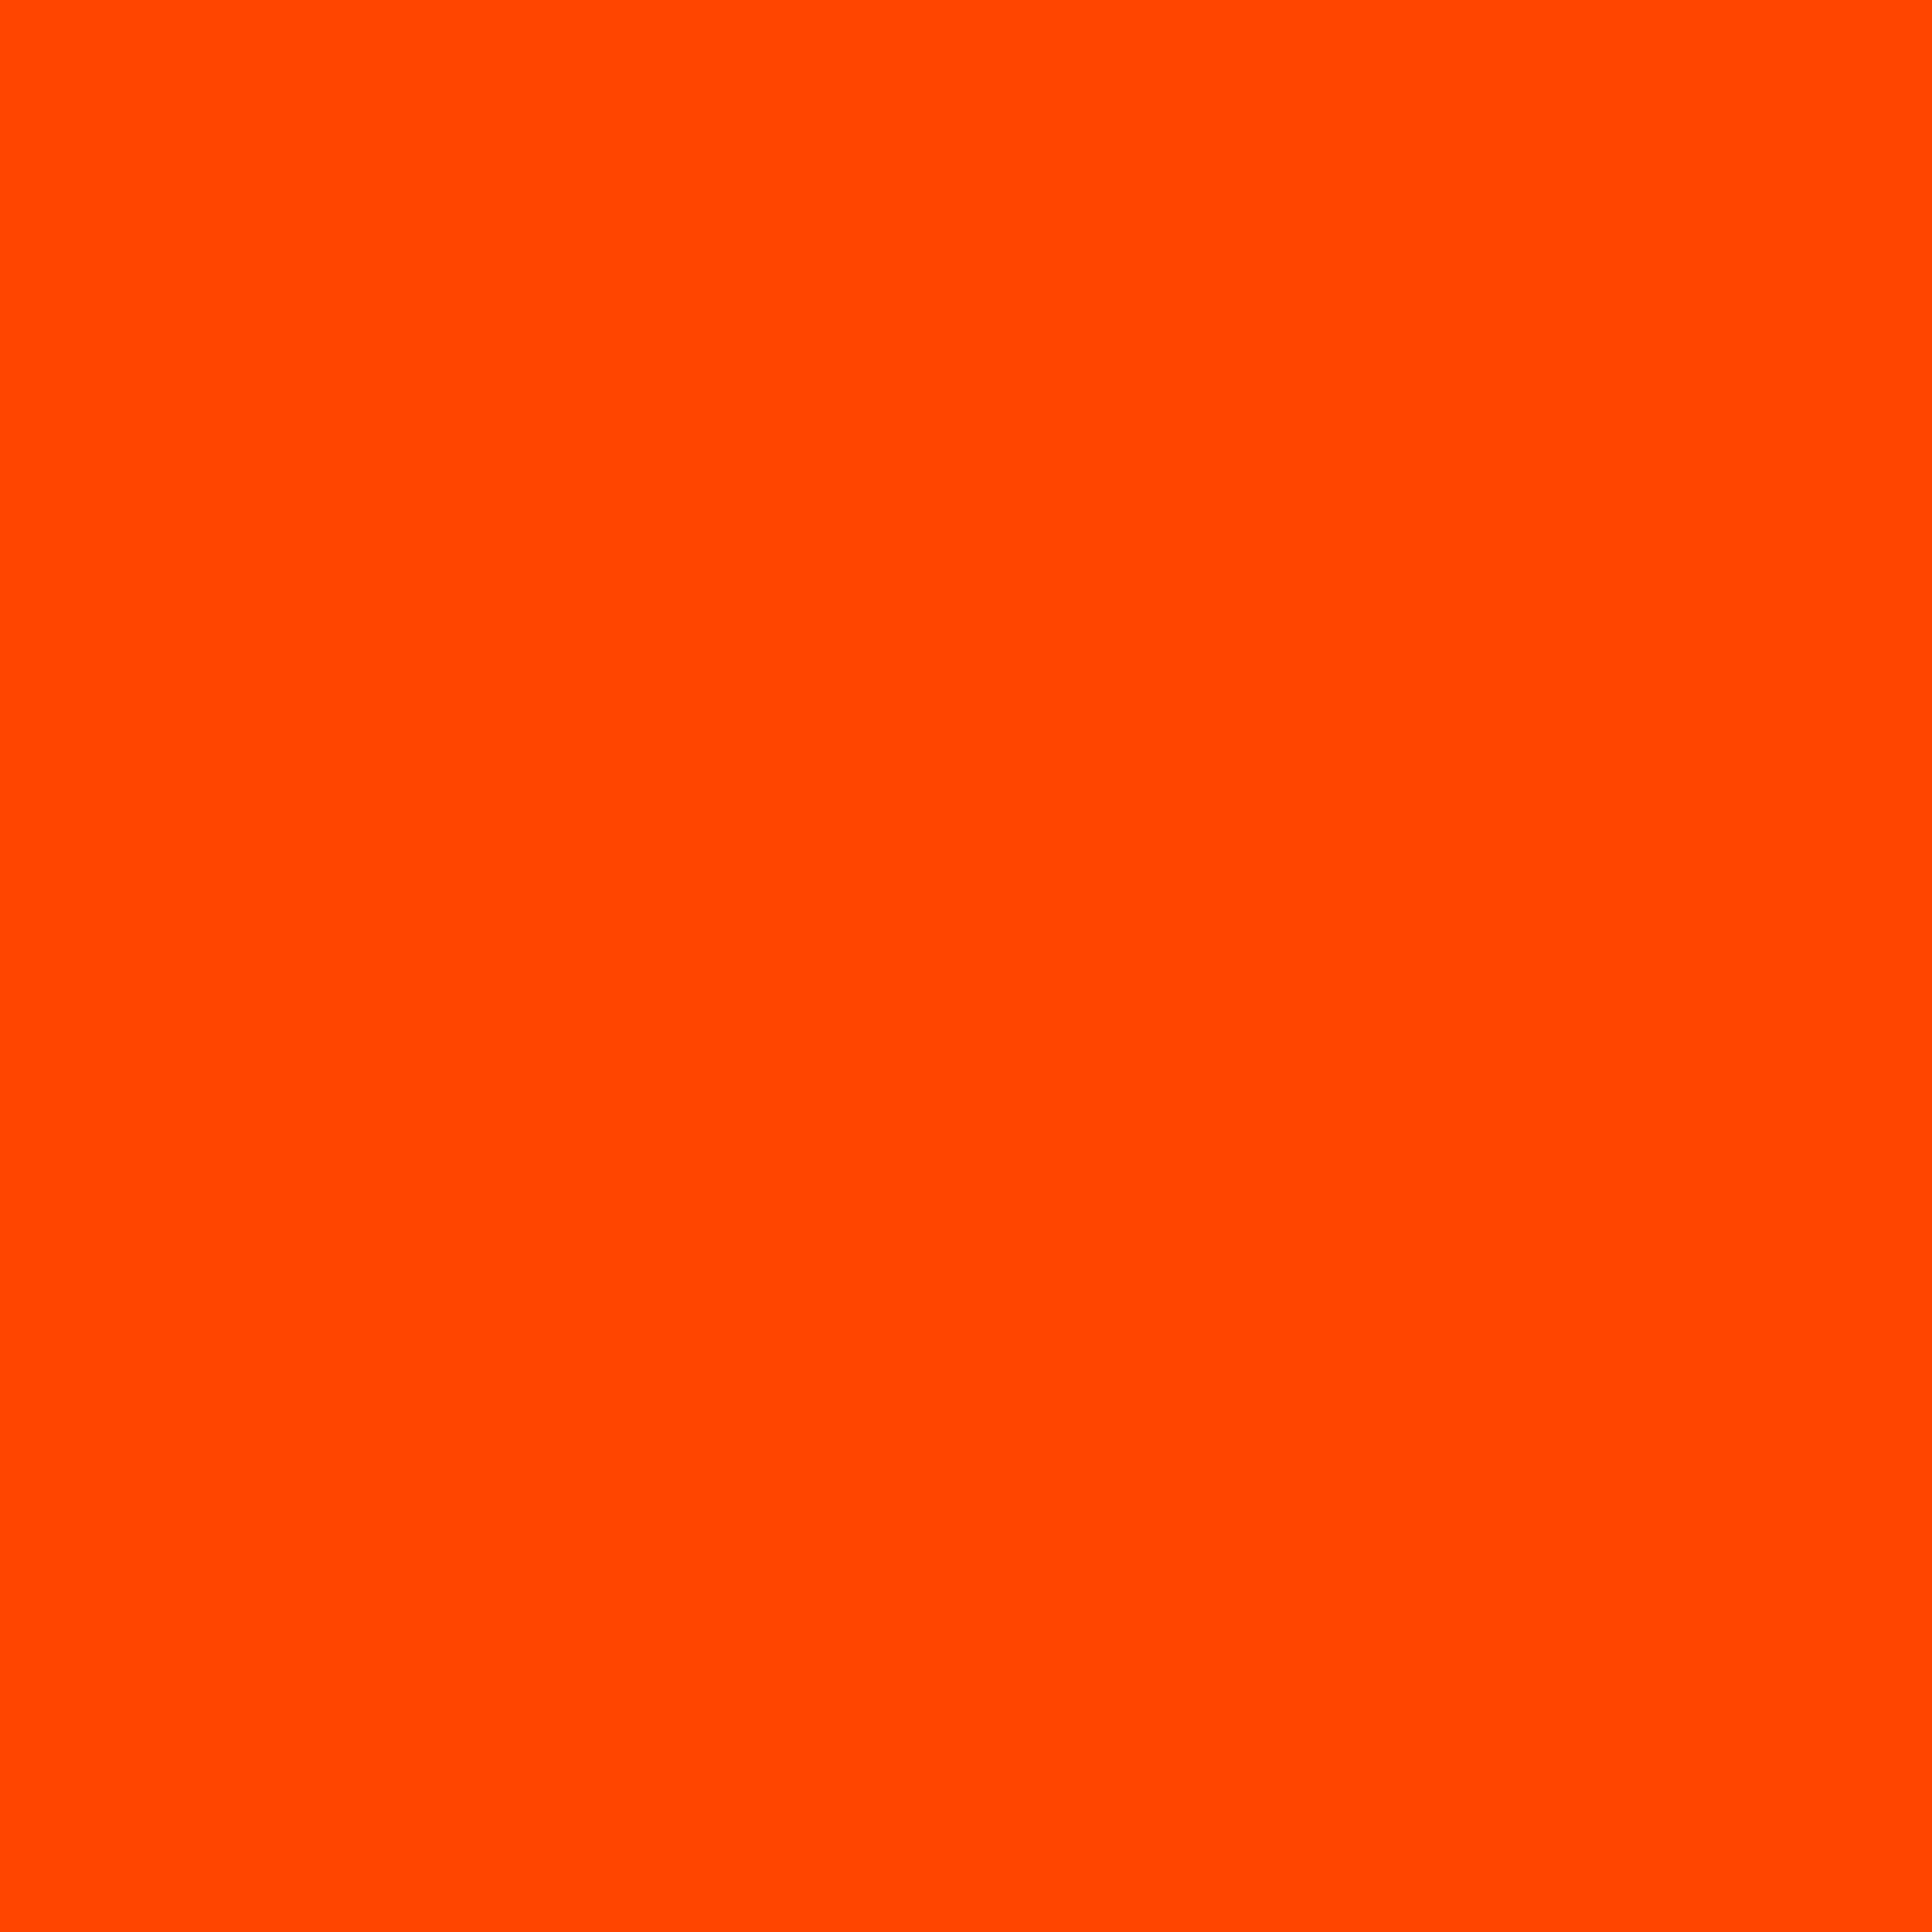 2732x2732 Orange-red Solid Color Background